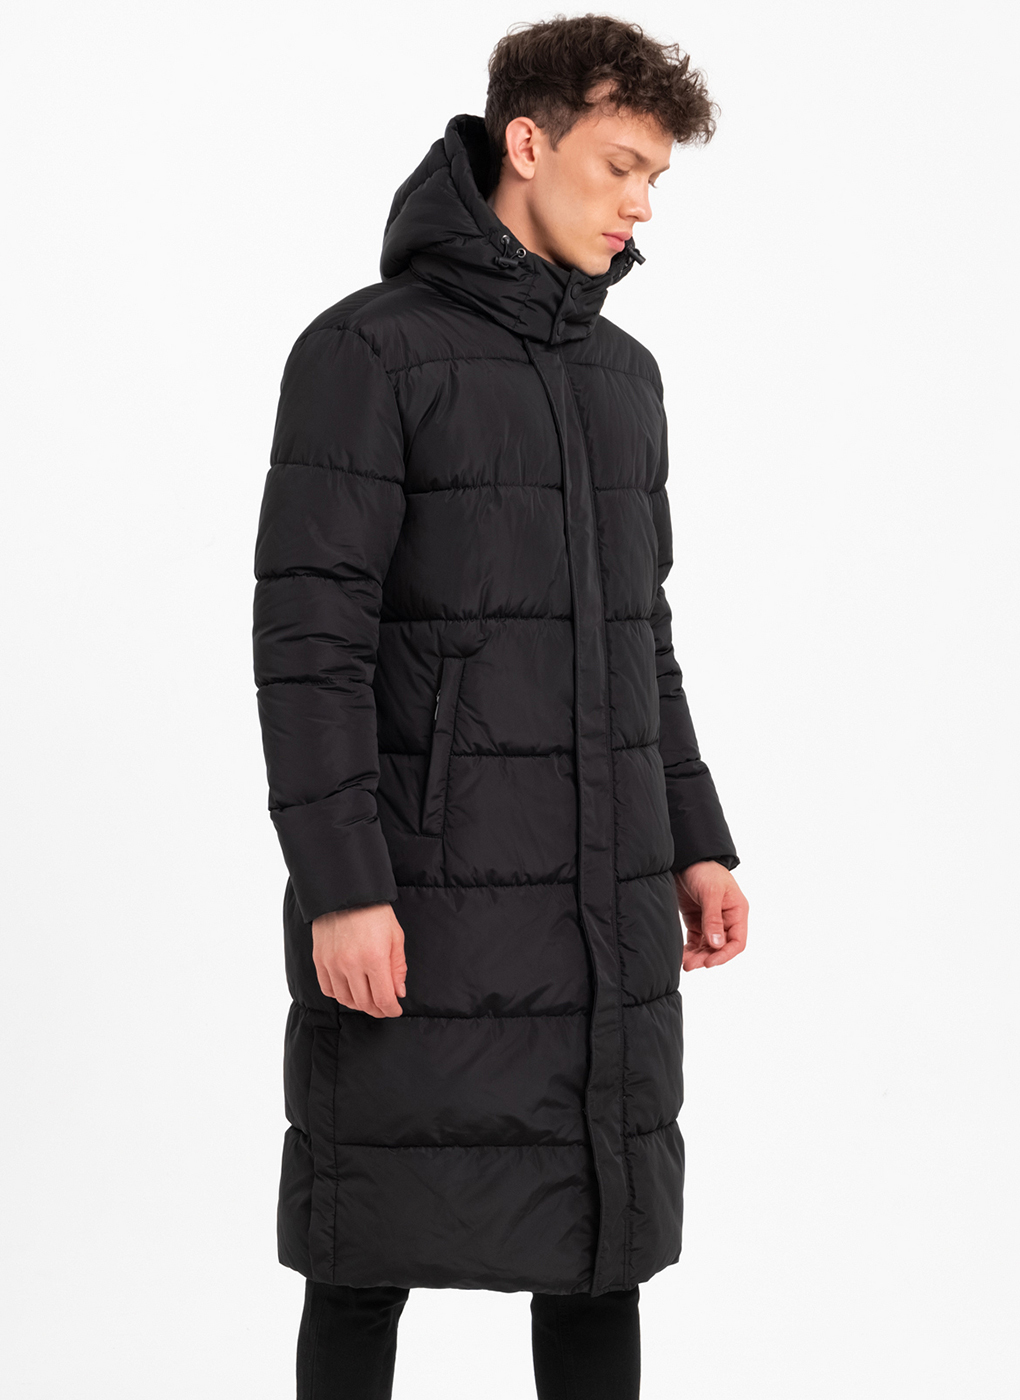 Зимняя куртка мужская Amimoda 65197 черная 50 RU